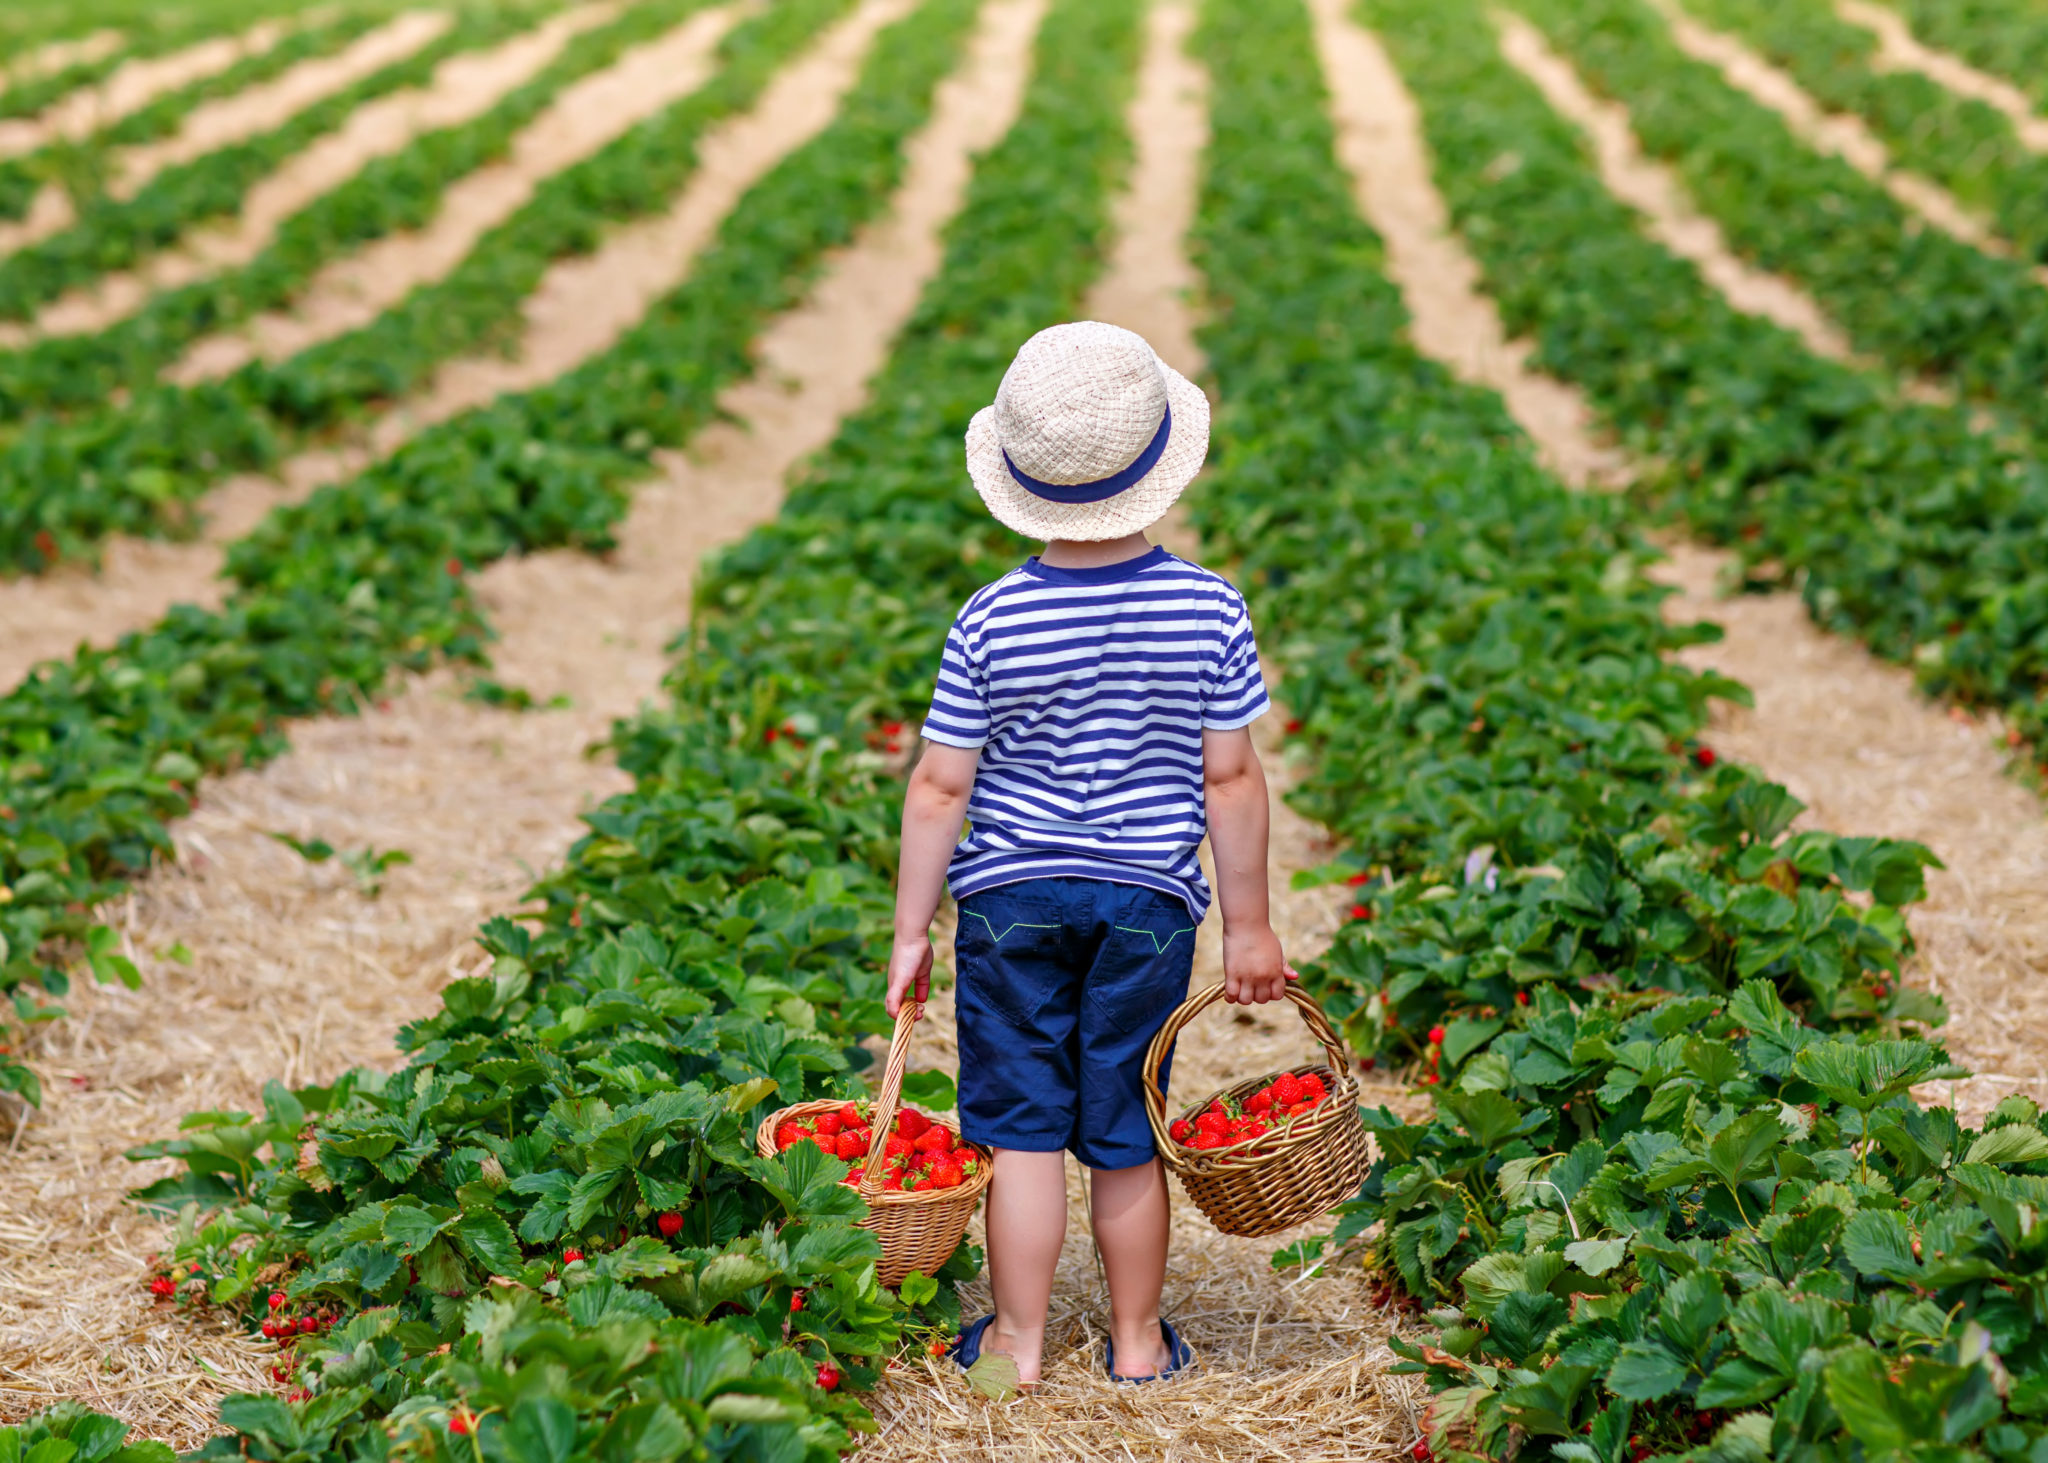 Little boy holding baskets full of strawberries in a field